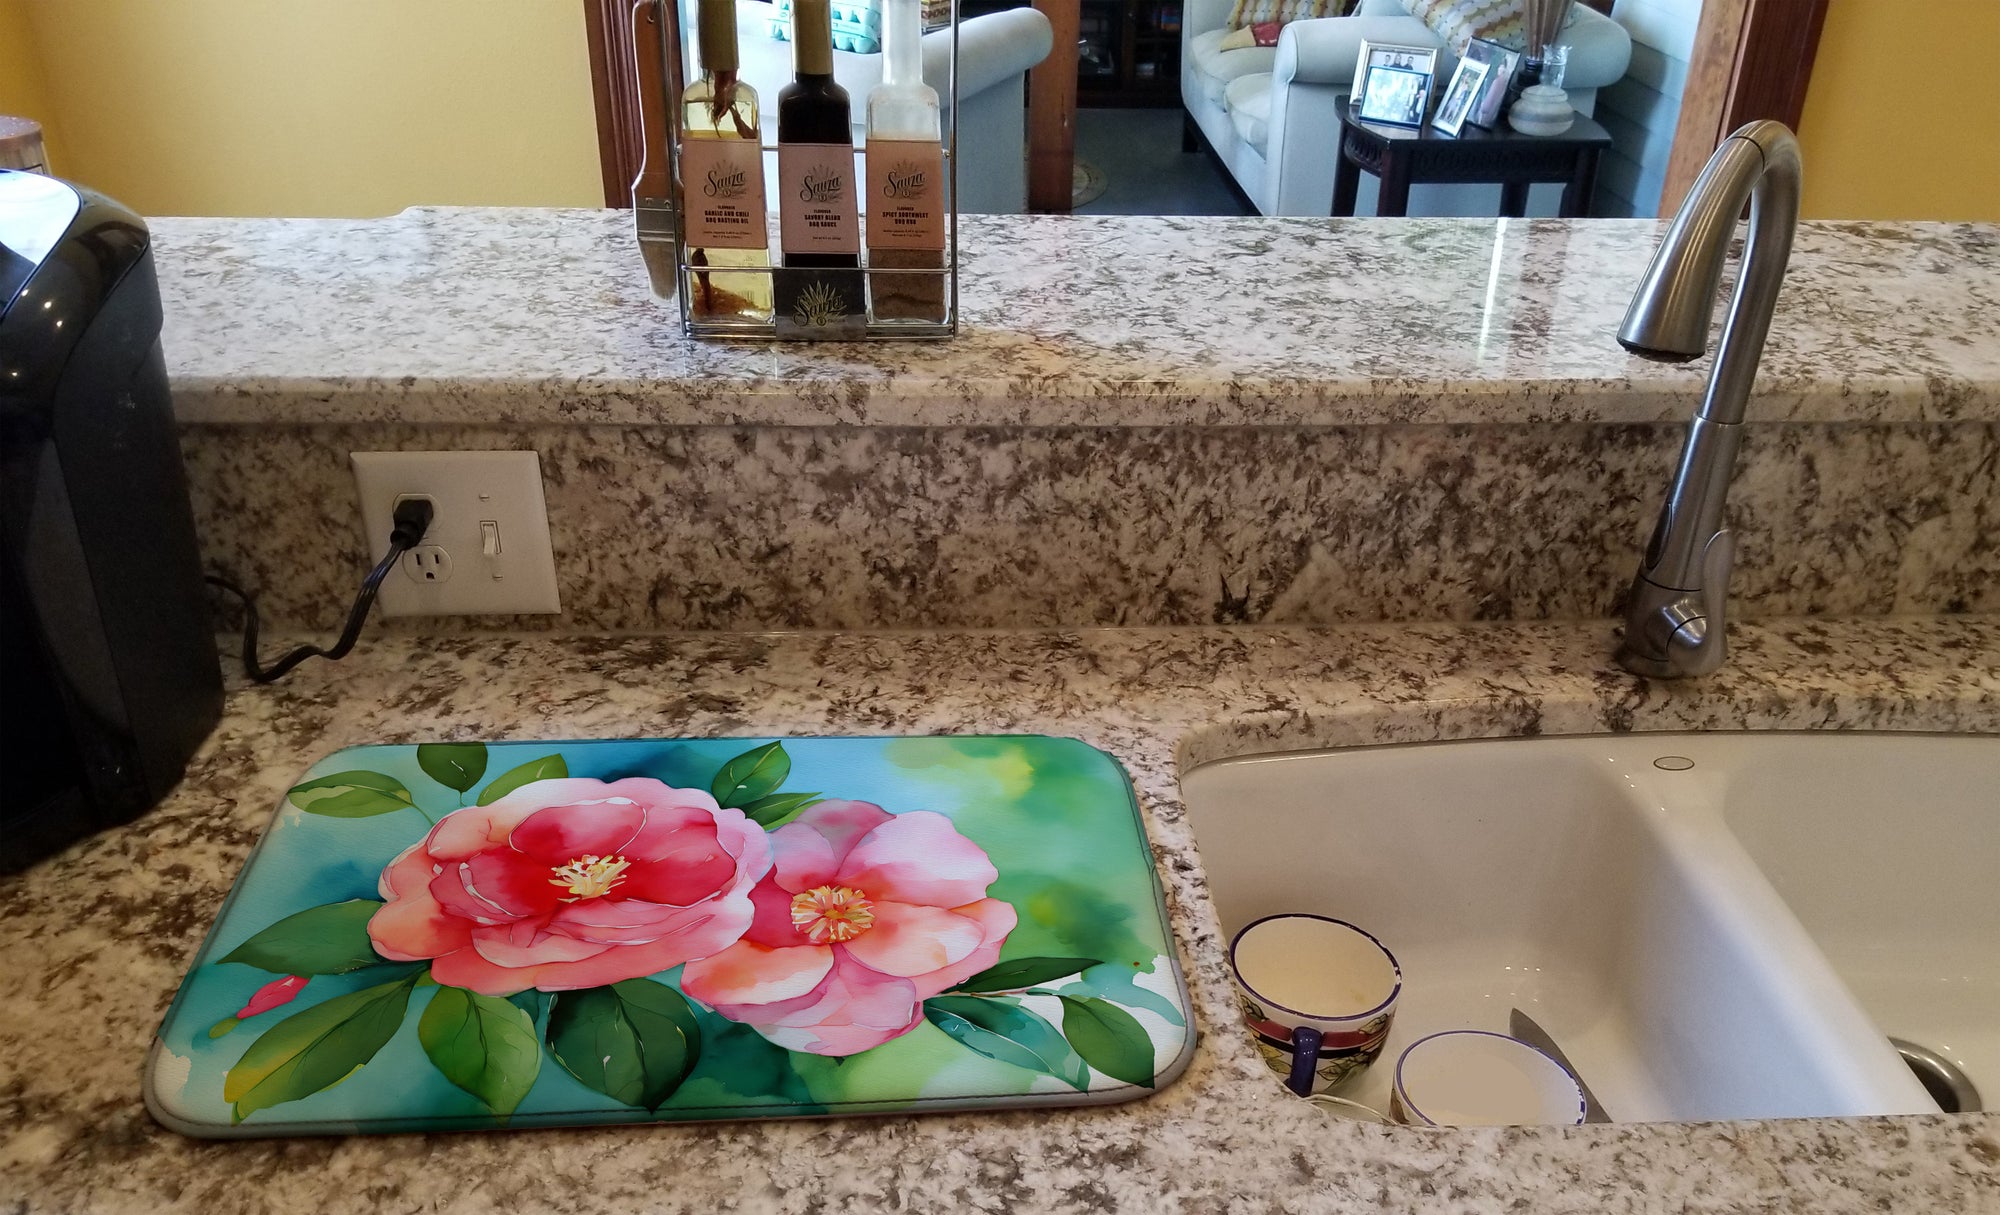 Buy this Alabama Camellia in Watercolor Dish Drying Mat